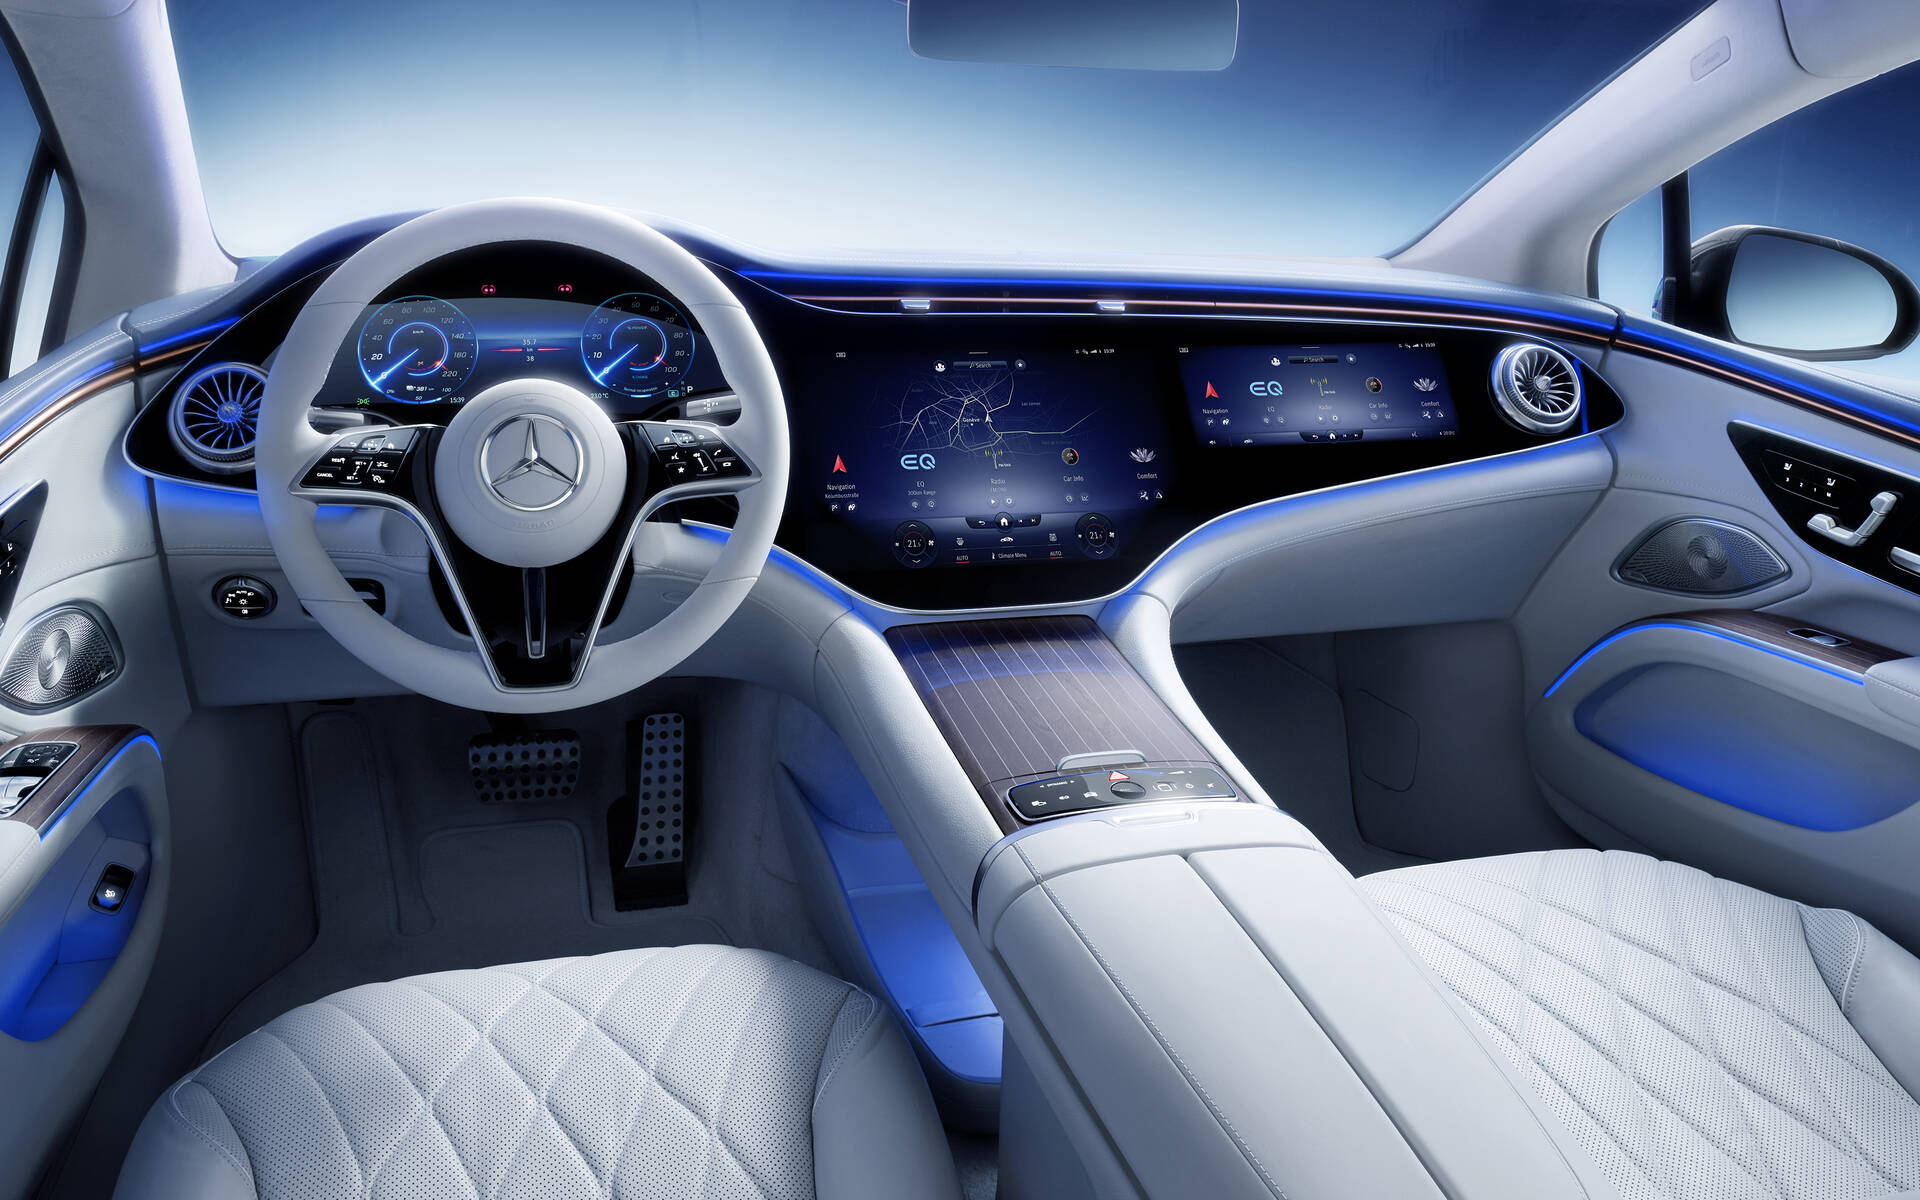 The 10 Best Car Interiors Of 2022 According To Wardsauto 111